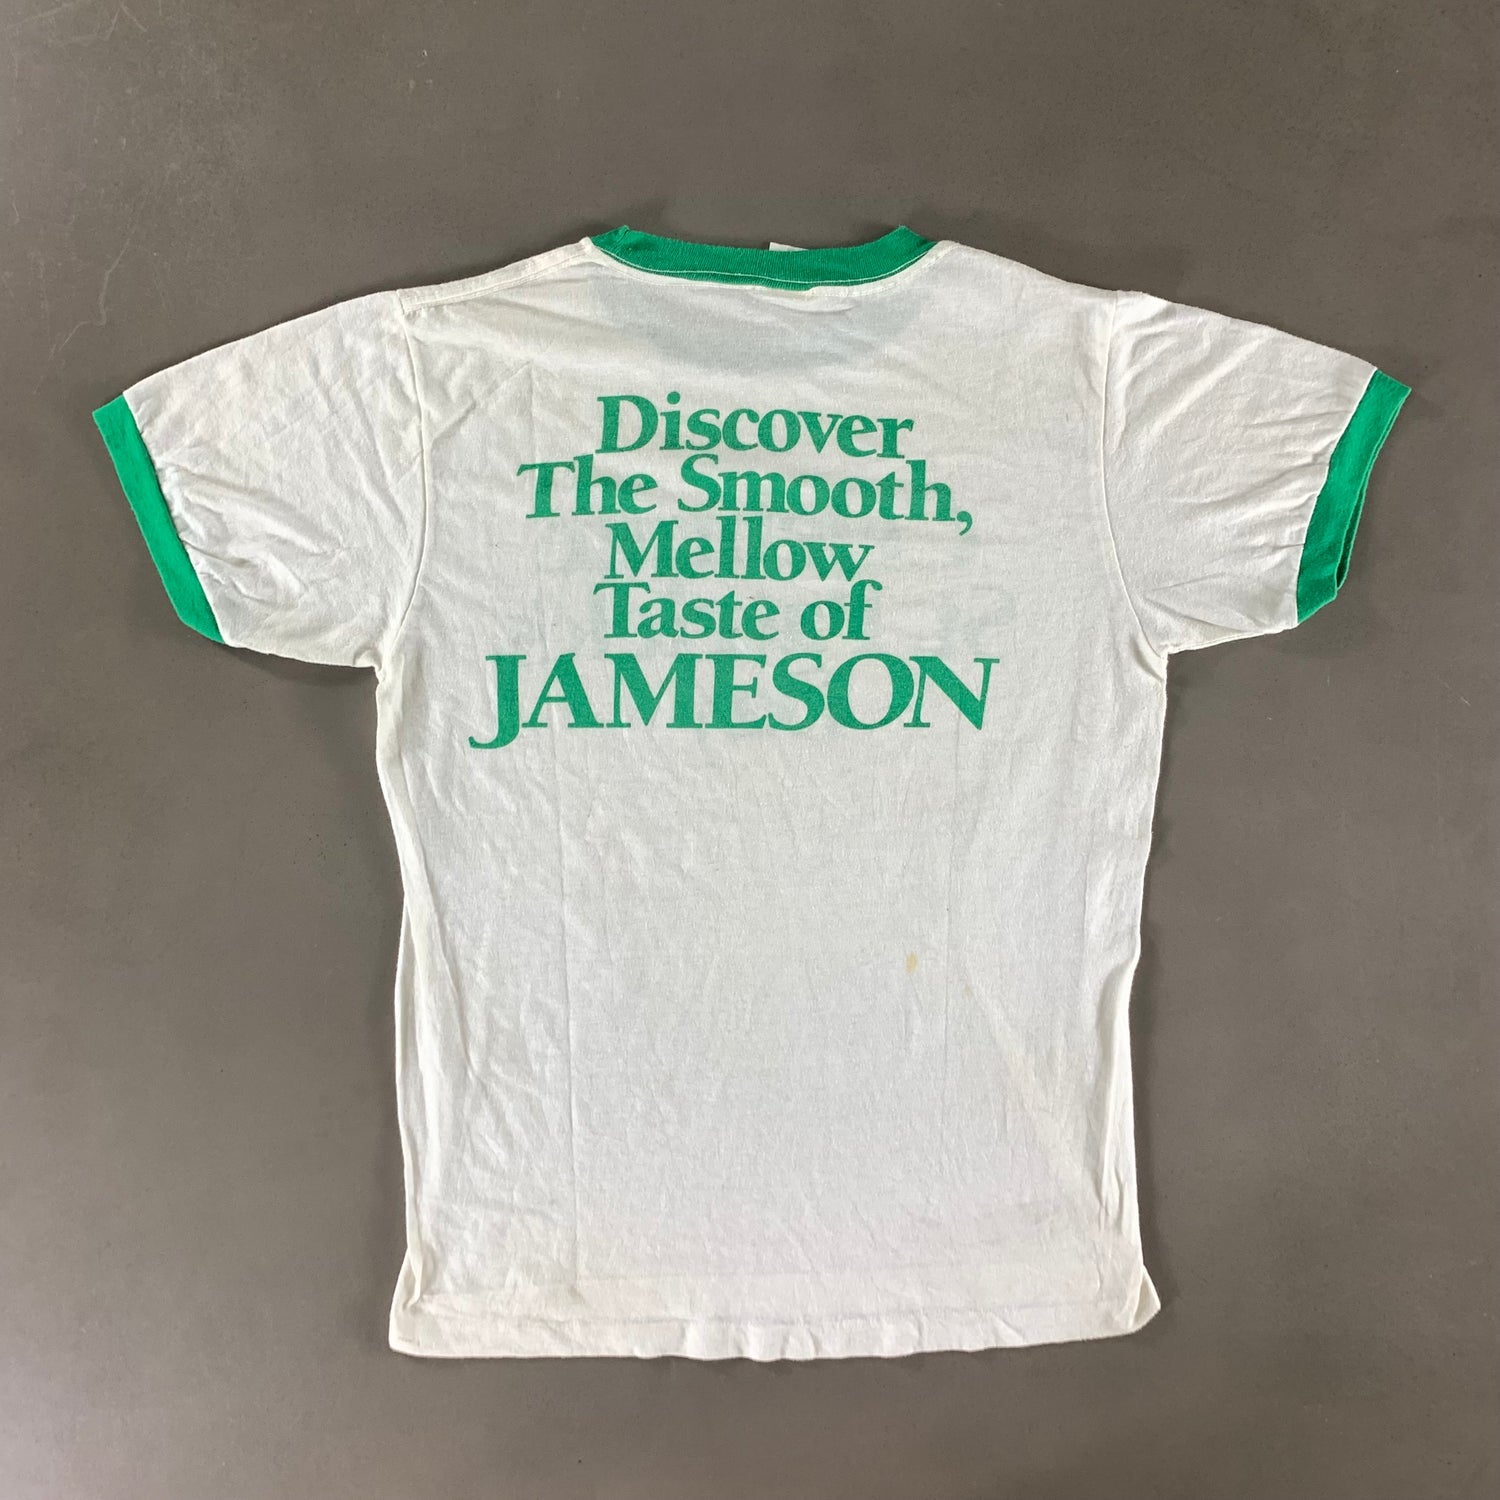 Vintage 1980s St. Patrick's Day T-shirt size Large